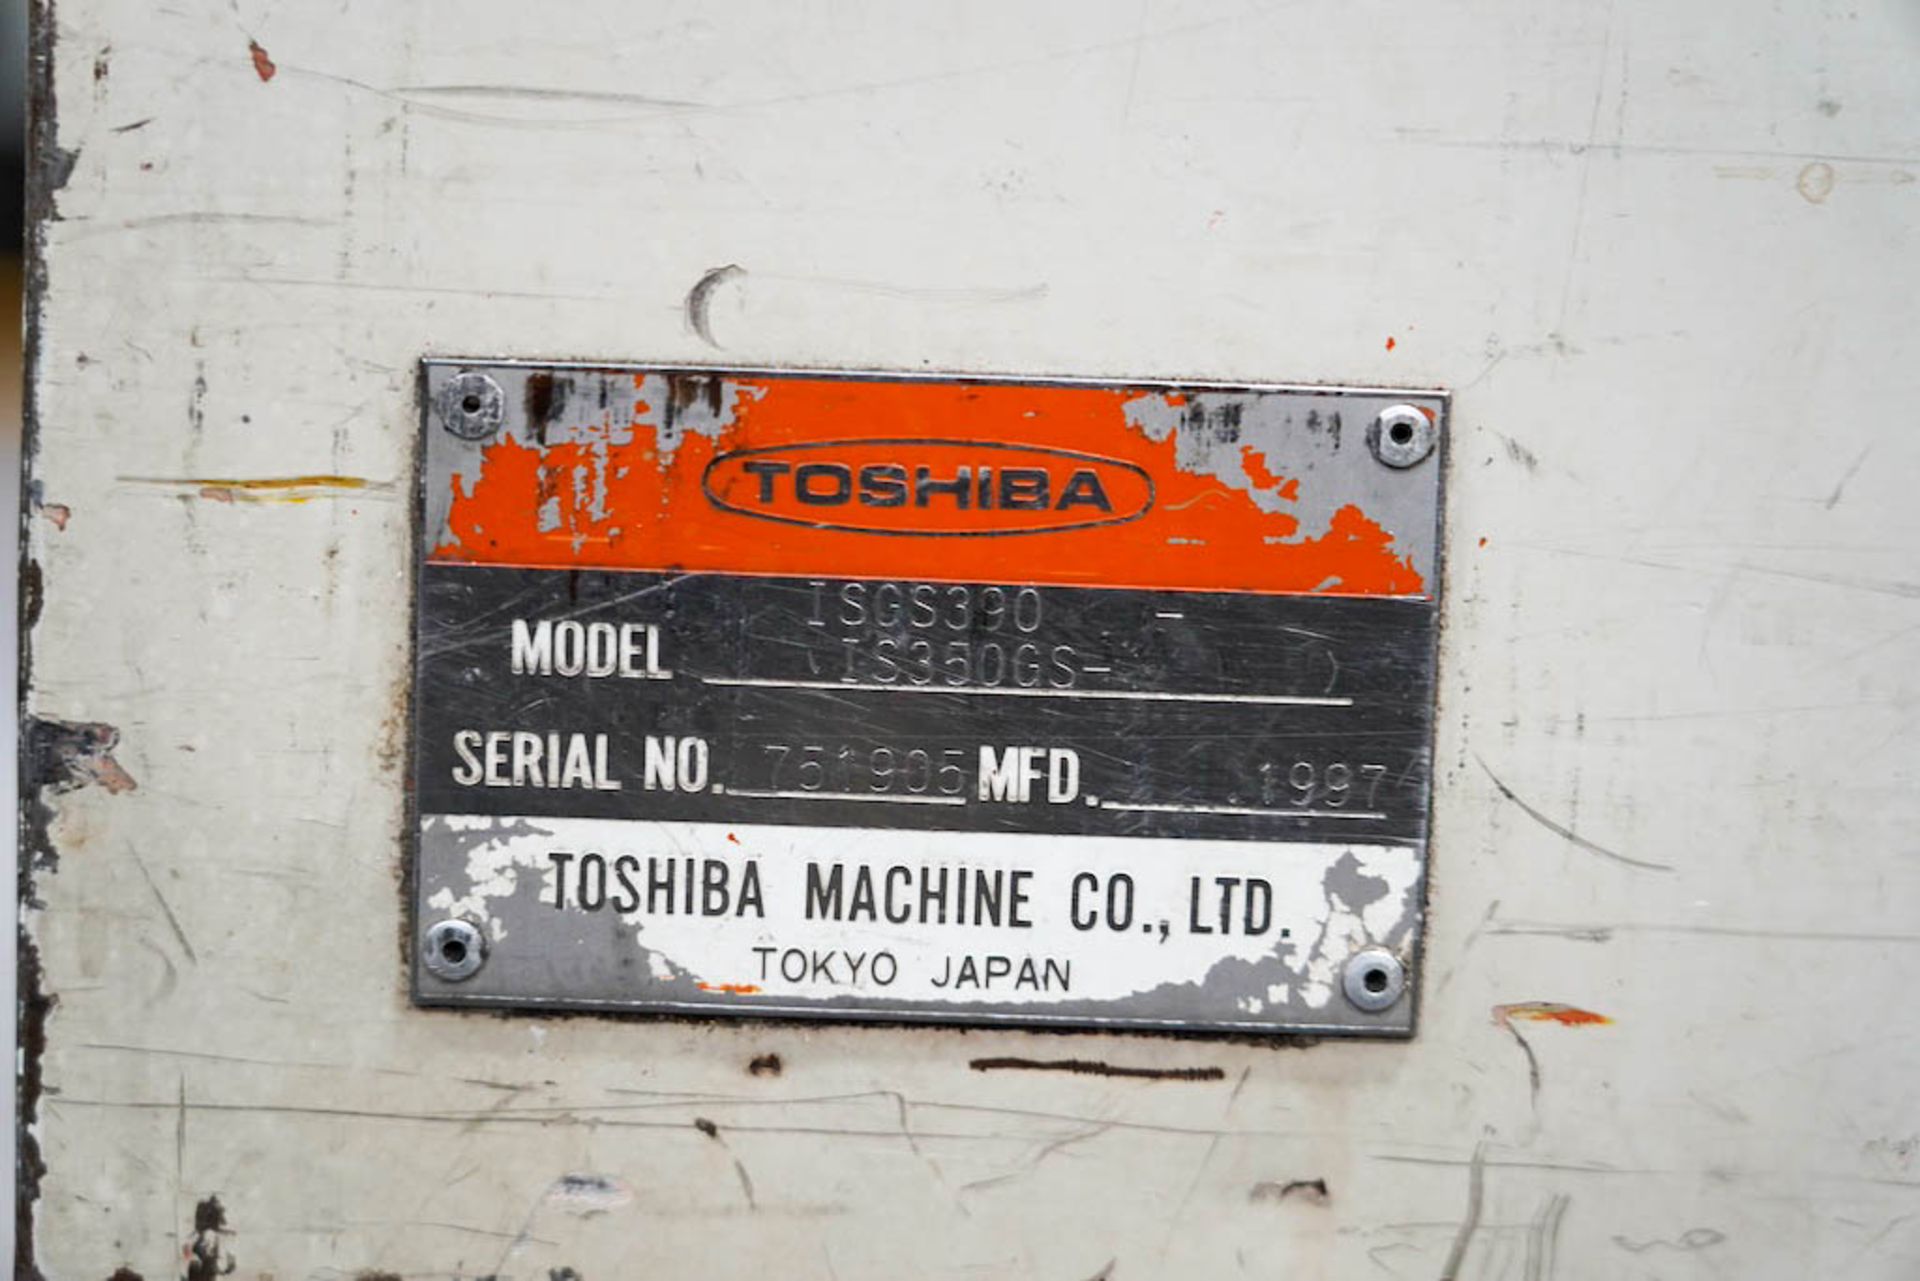 Toshiba 390 Ton Injection Molding Press - Image 8 of 8